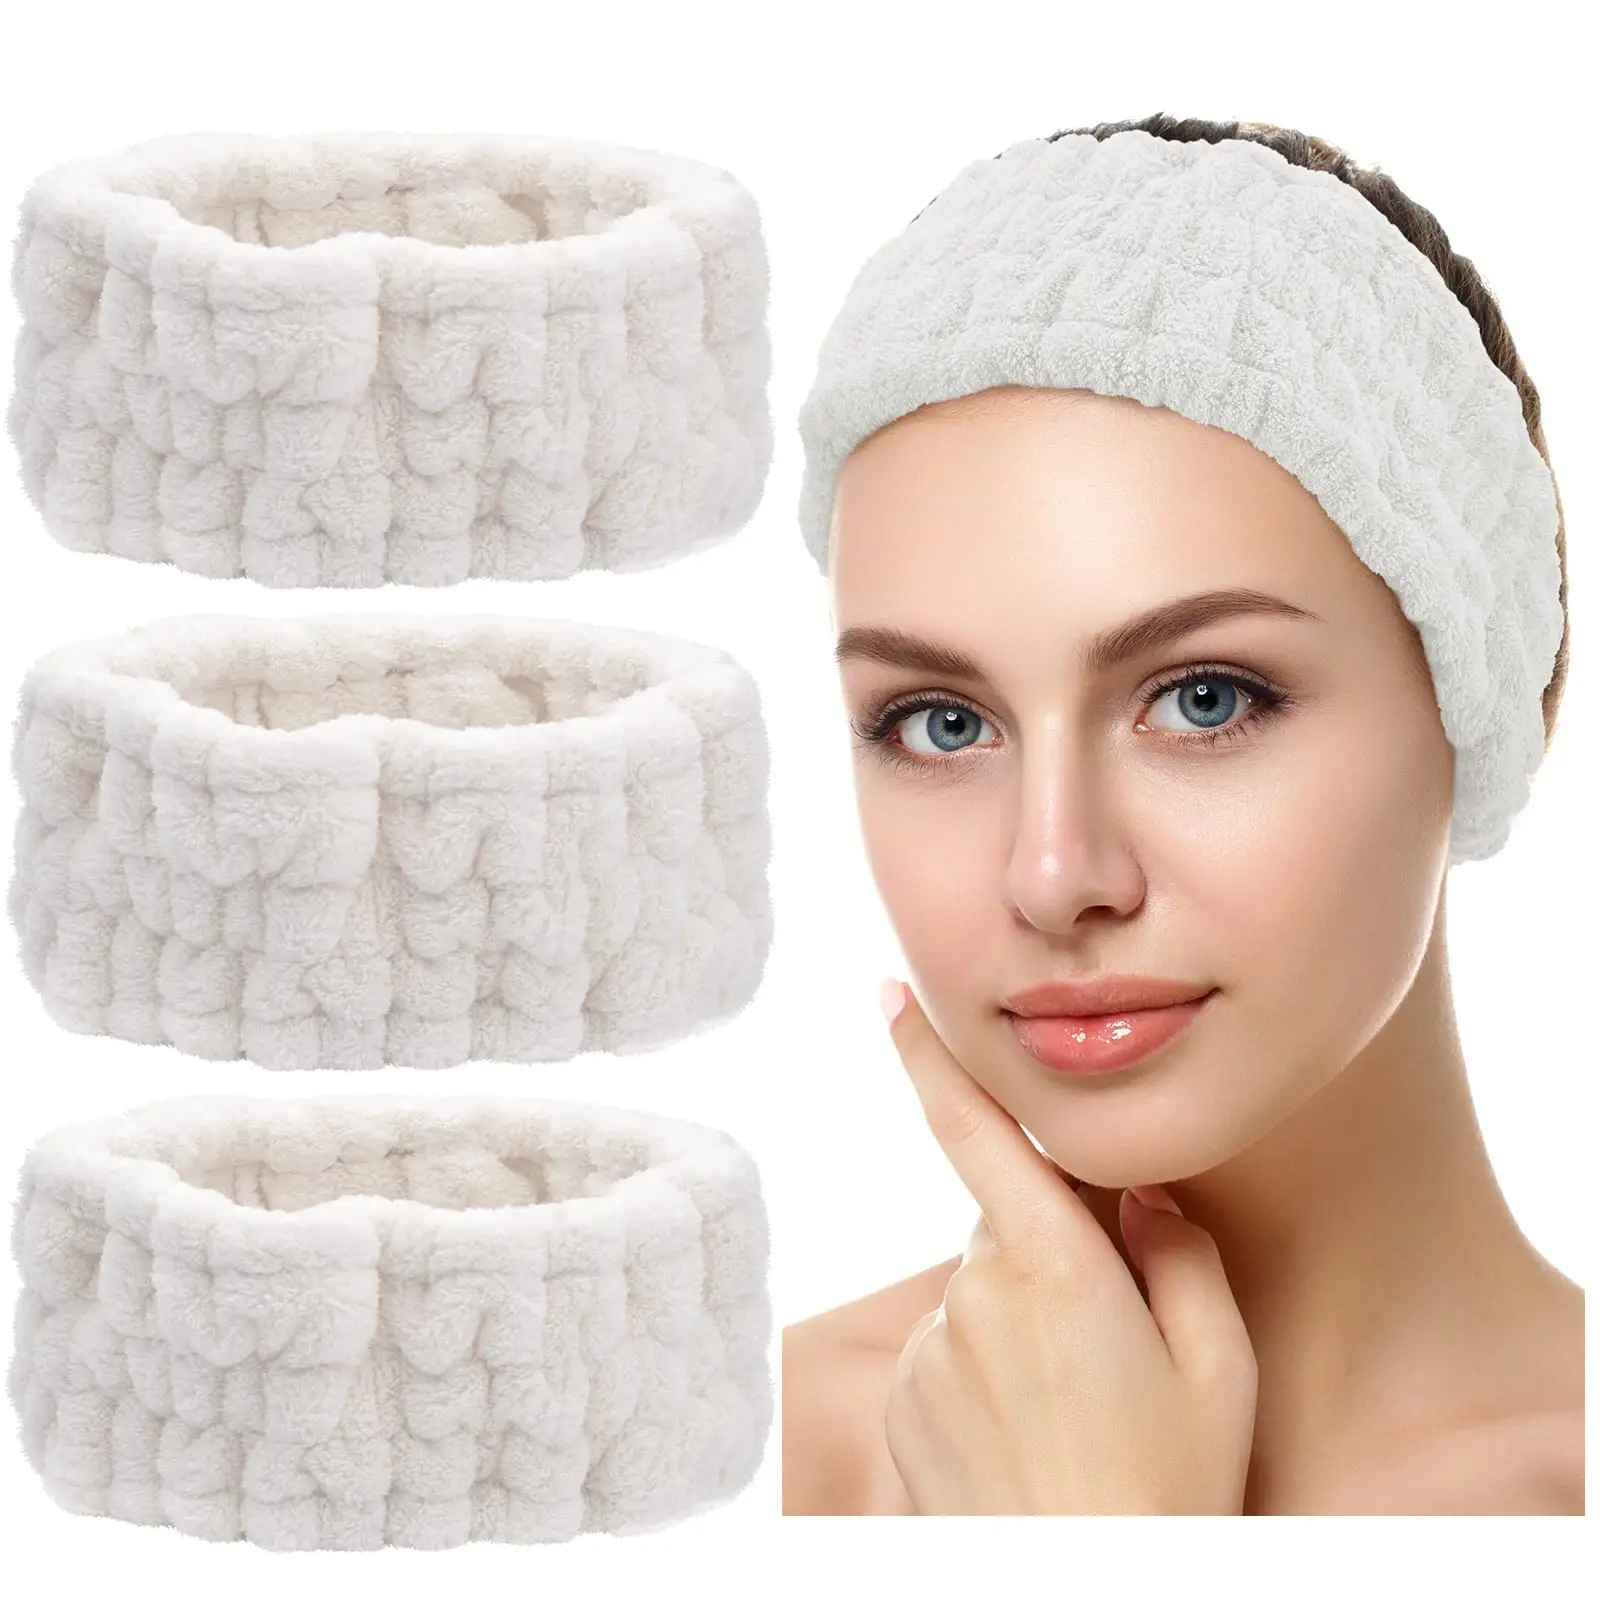 Spa Facial Headband Makeup Washing Face Hairband Yoga Sports Shower Facial Elastic Head Band Wrap for Girls and women